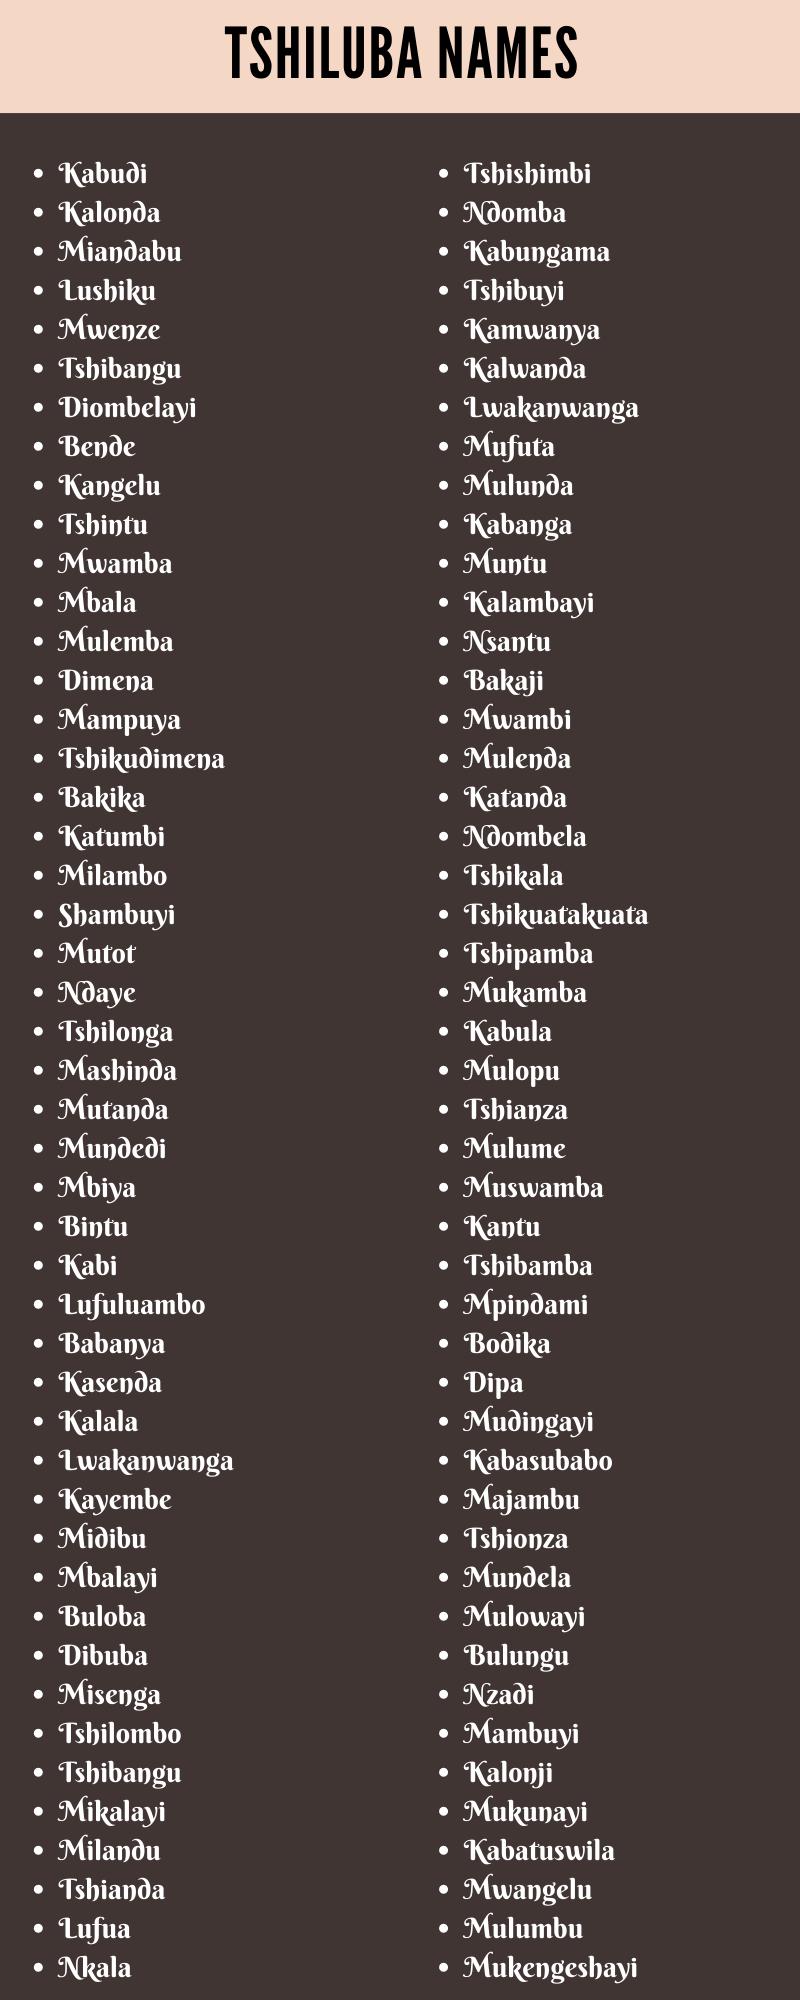 Tshiluba Names